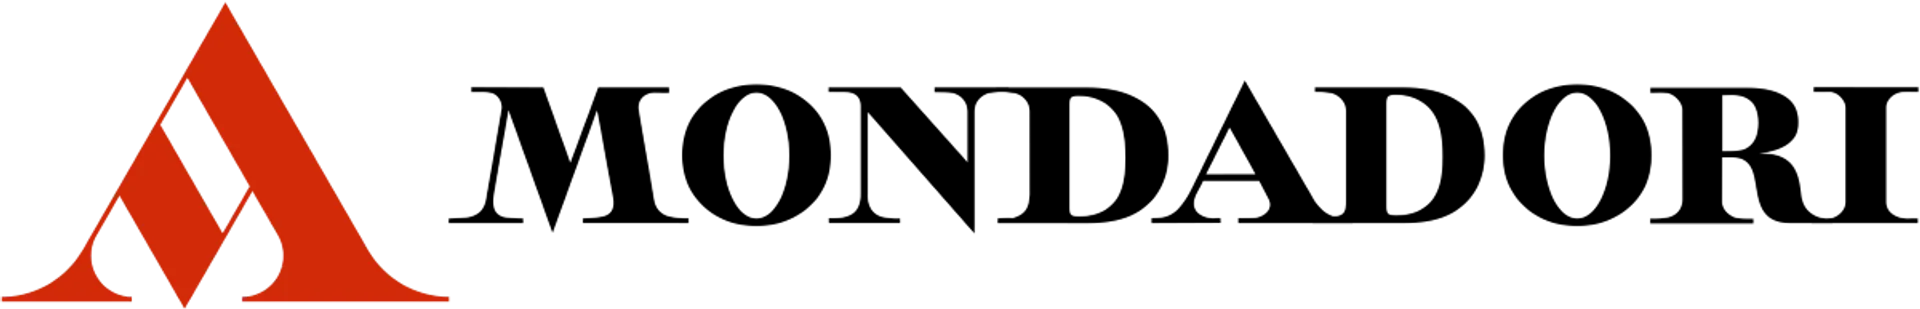 MONDADORI logo